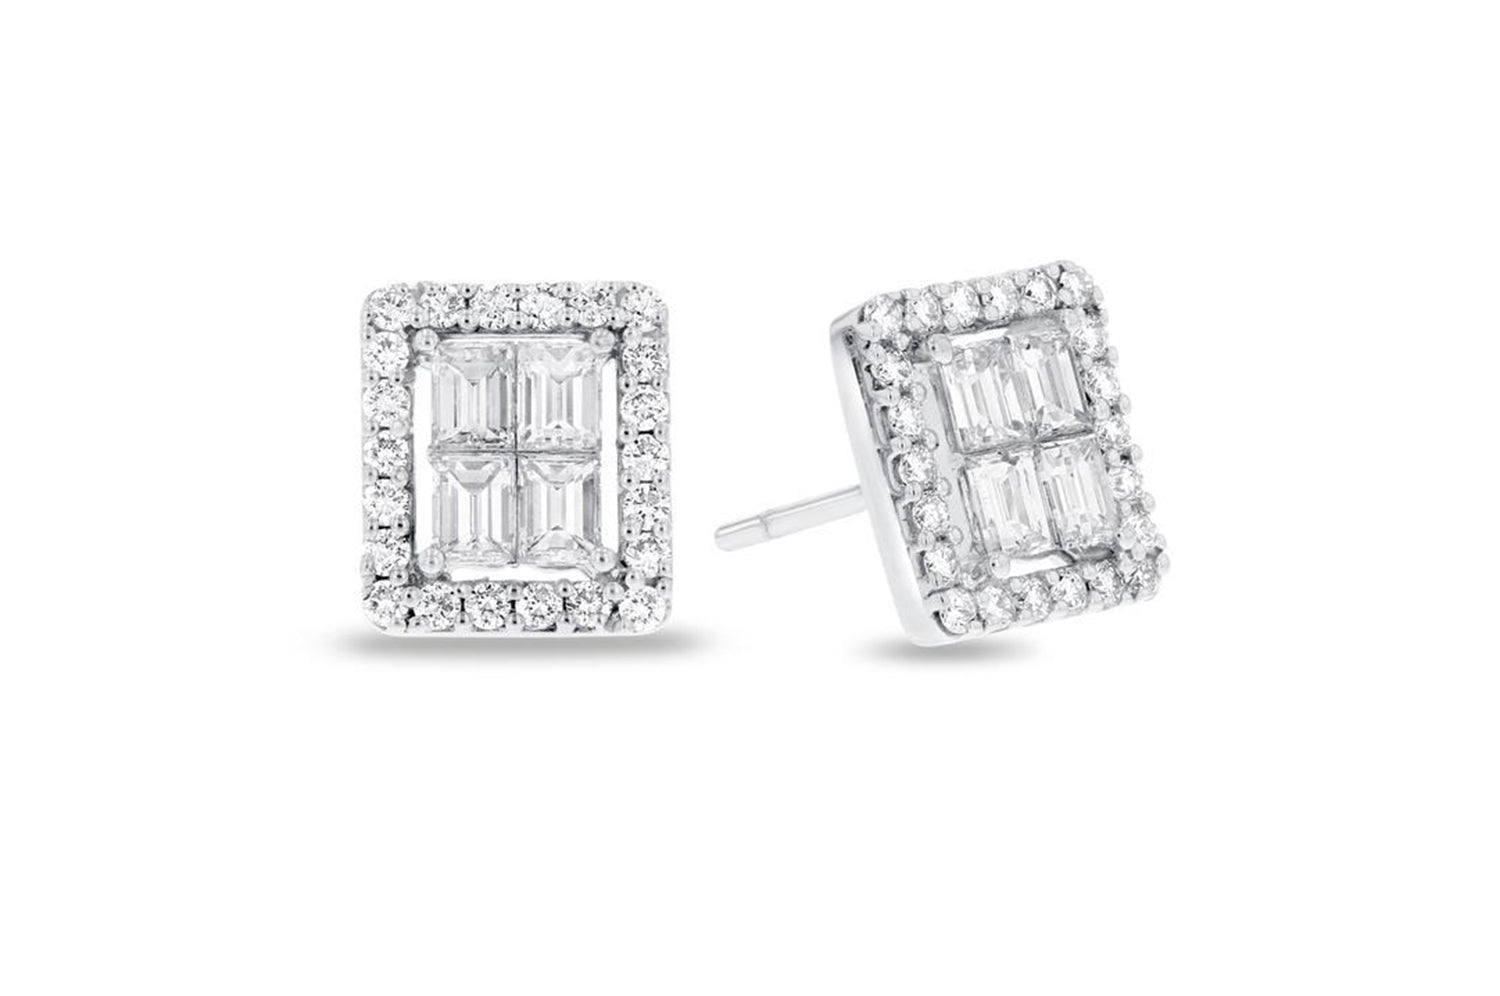 'Quincy' 18K White Gold Diamond Earrings, 1.24 Carats